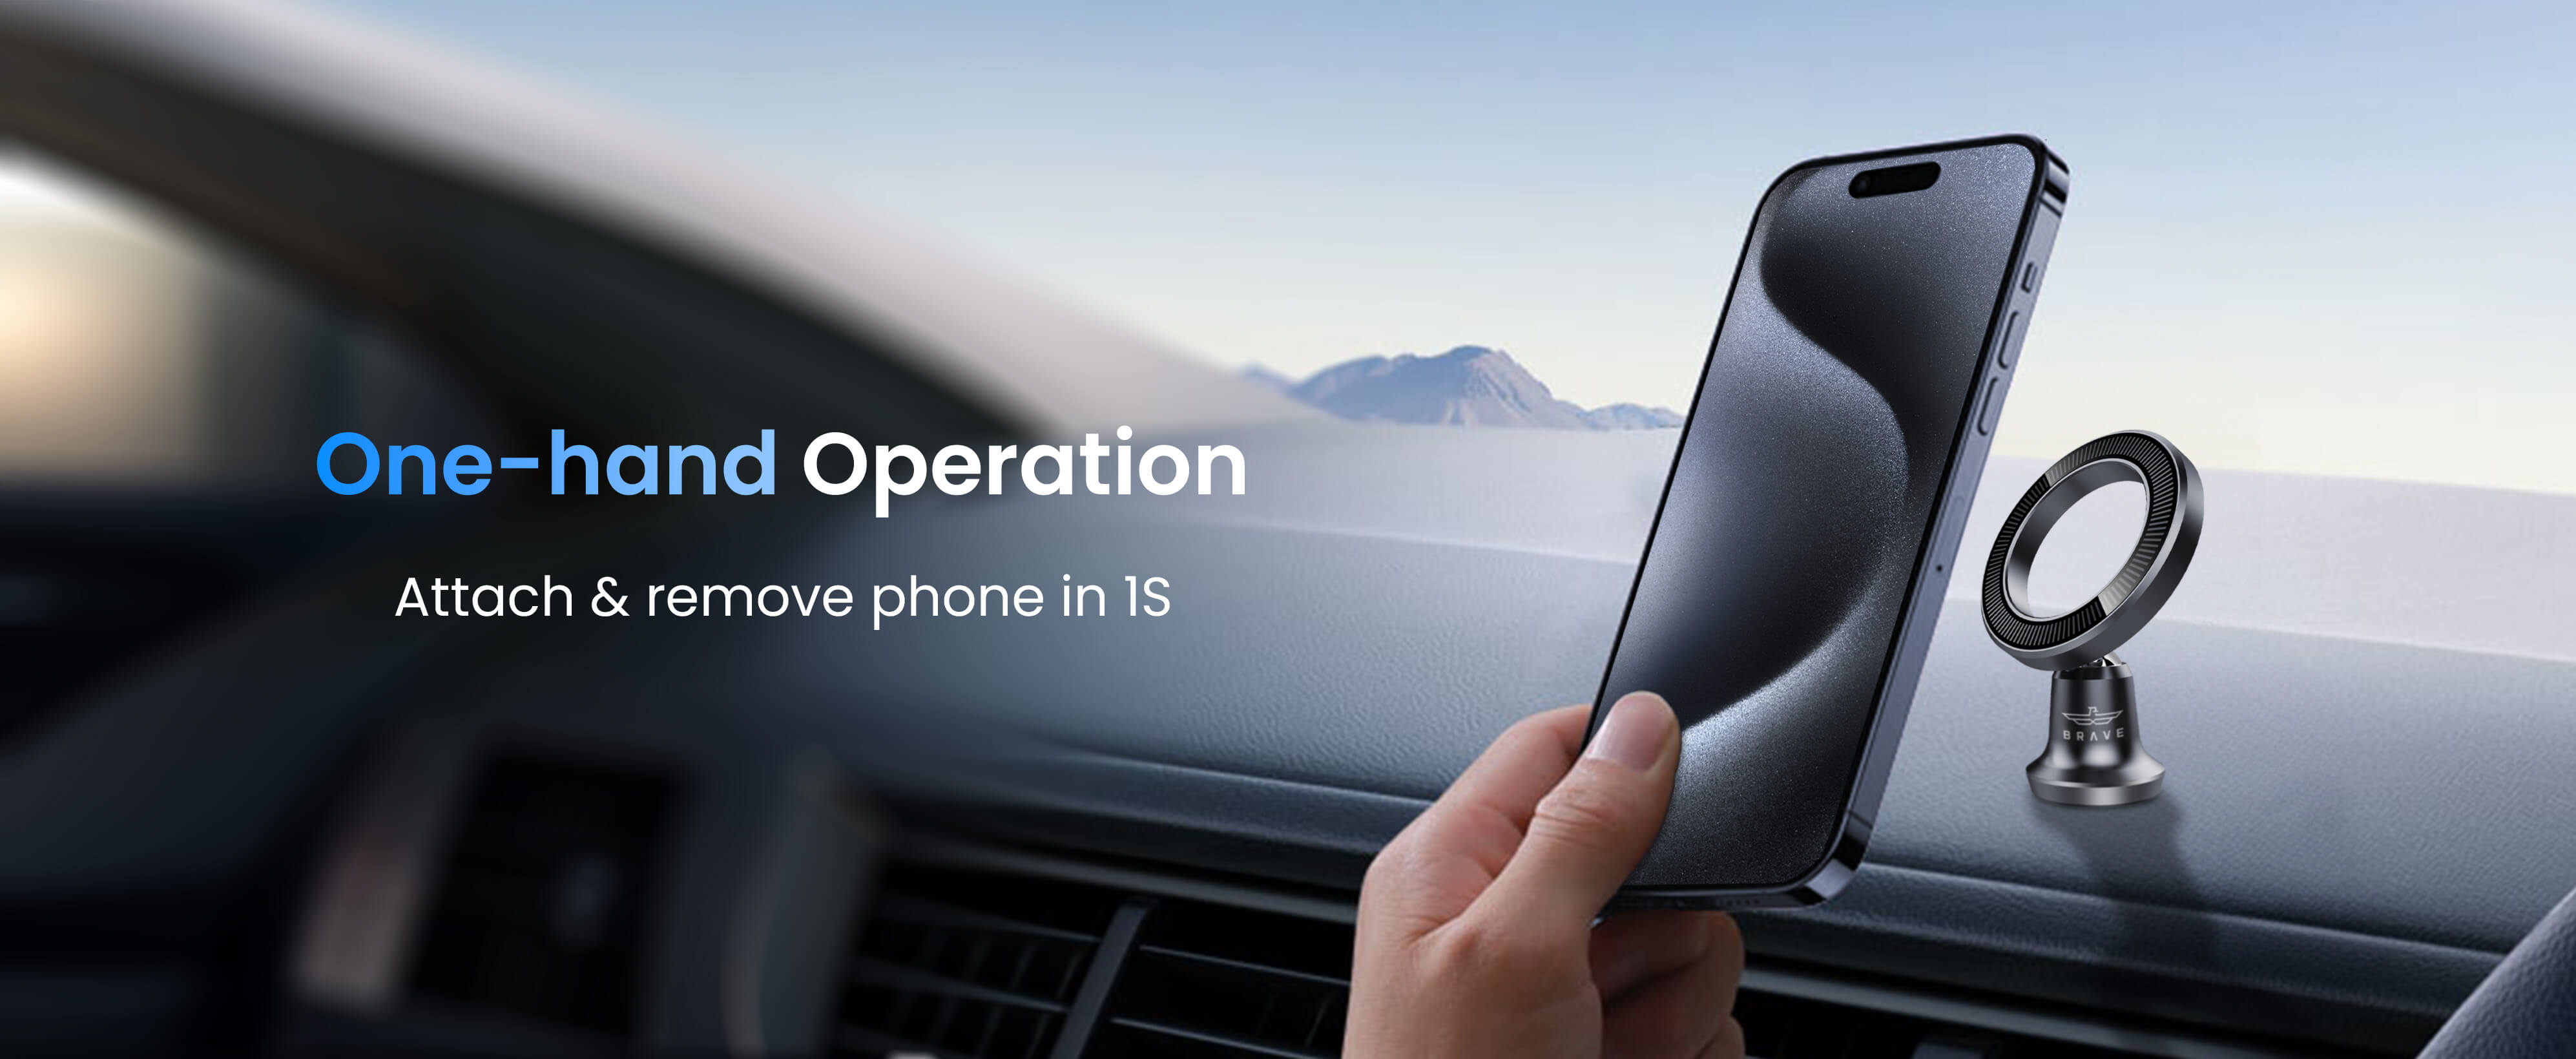 Brave MagSafe Car Phone Holder BHL-52 - 360° Rotatable, Universal – Black